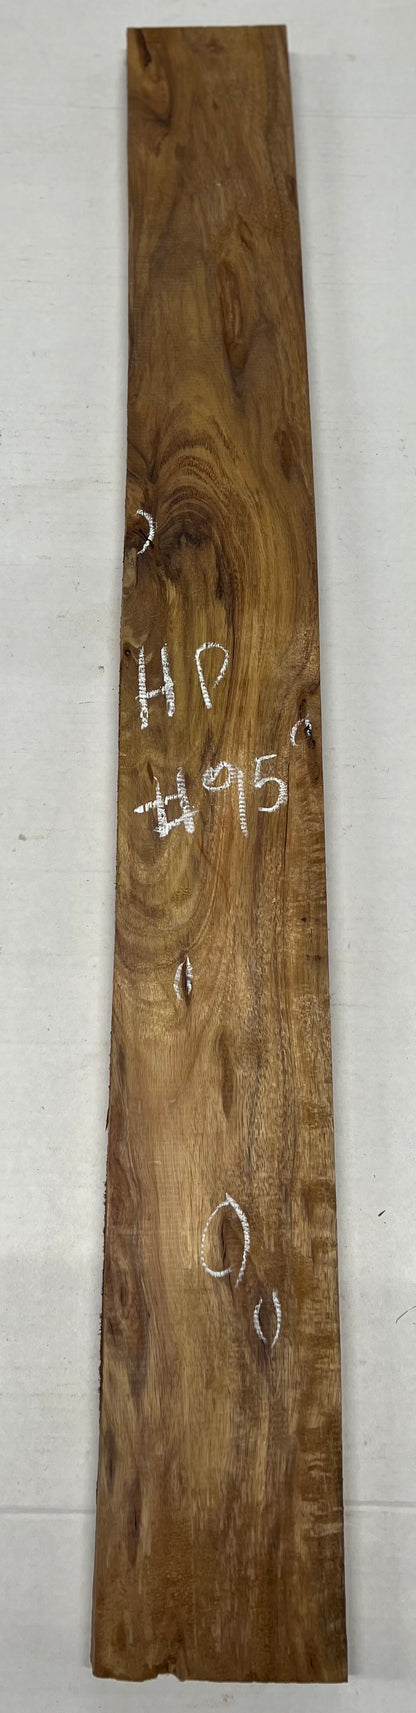 Koa Lumber Board Square Wood Blank 42&quot;x4-3/4&quot;x7/8&quot;  